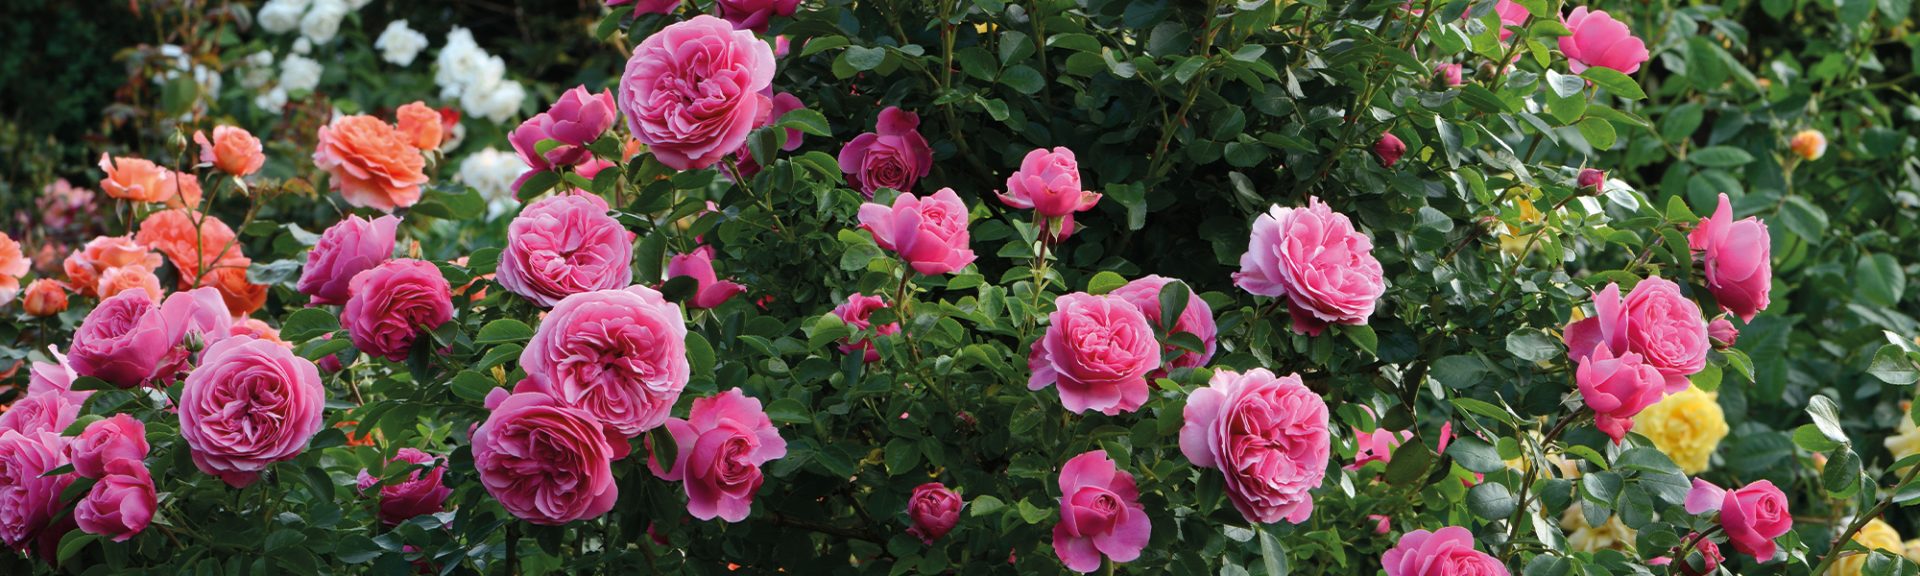 Buisson de rosier rose